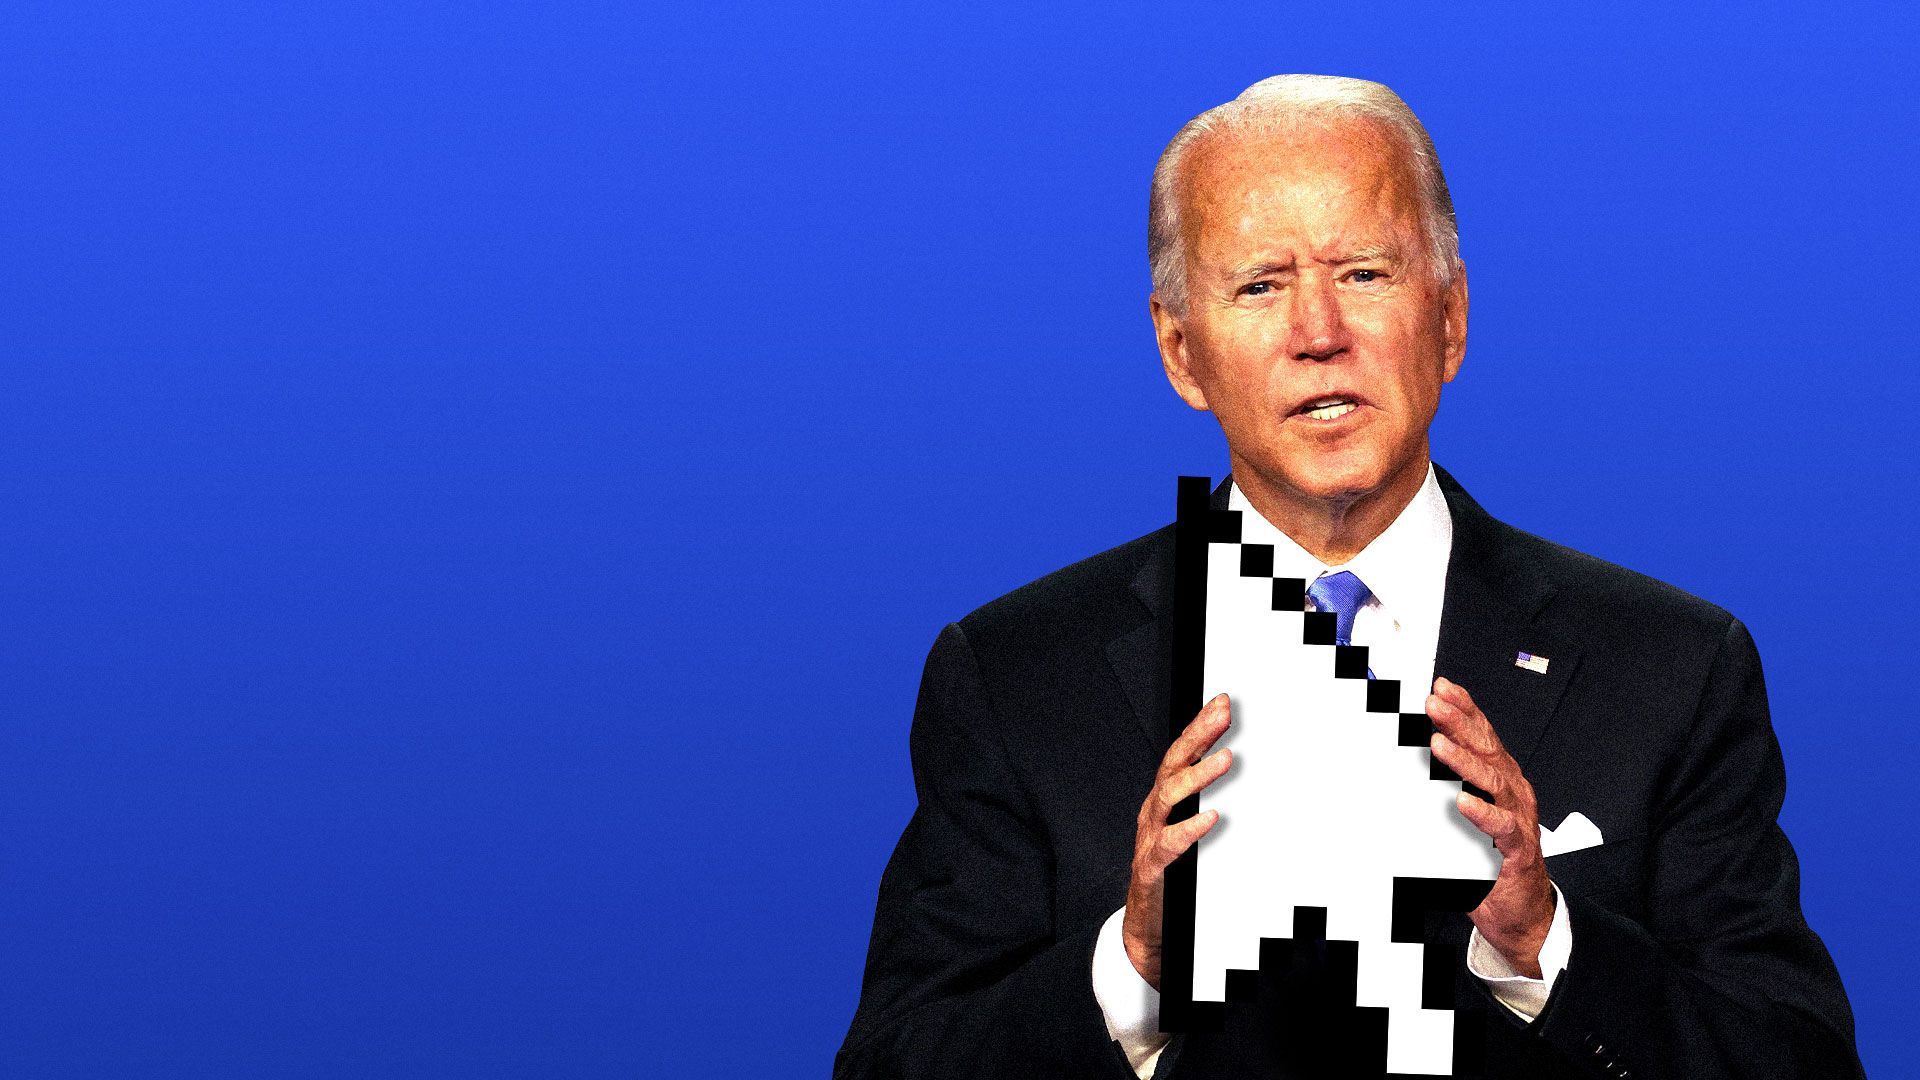 Illustration of Joseph Biden holding a cursor